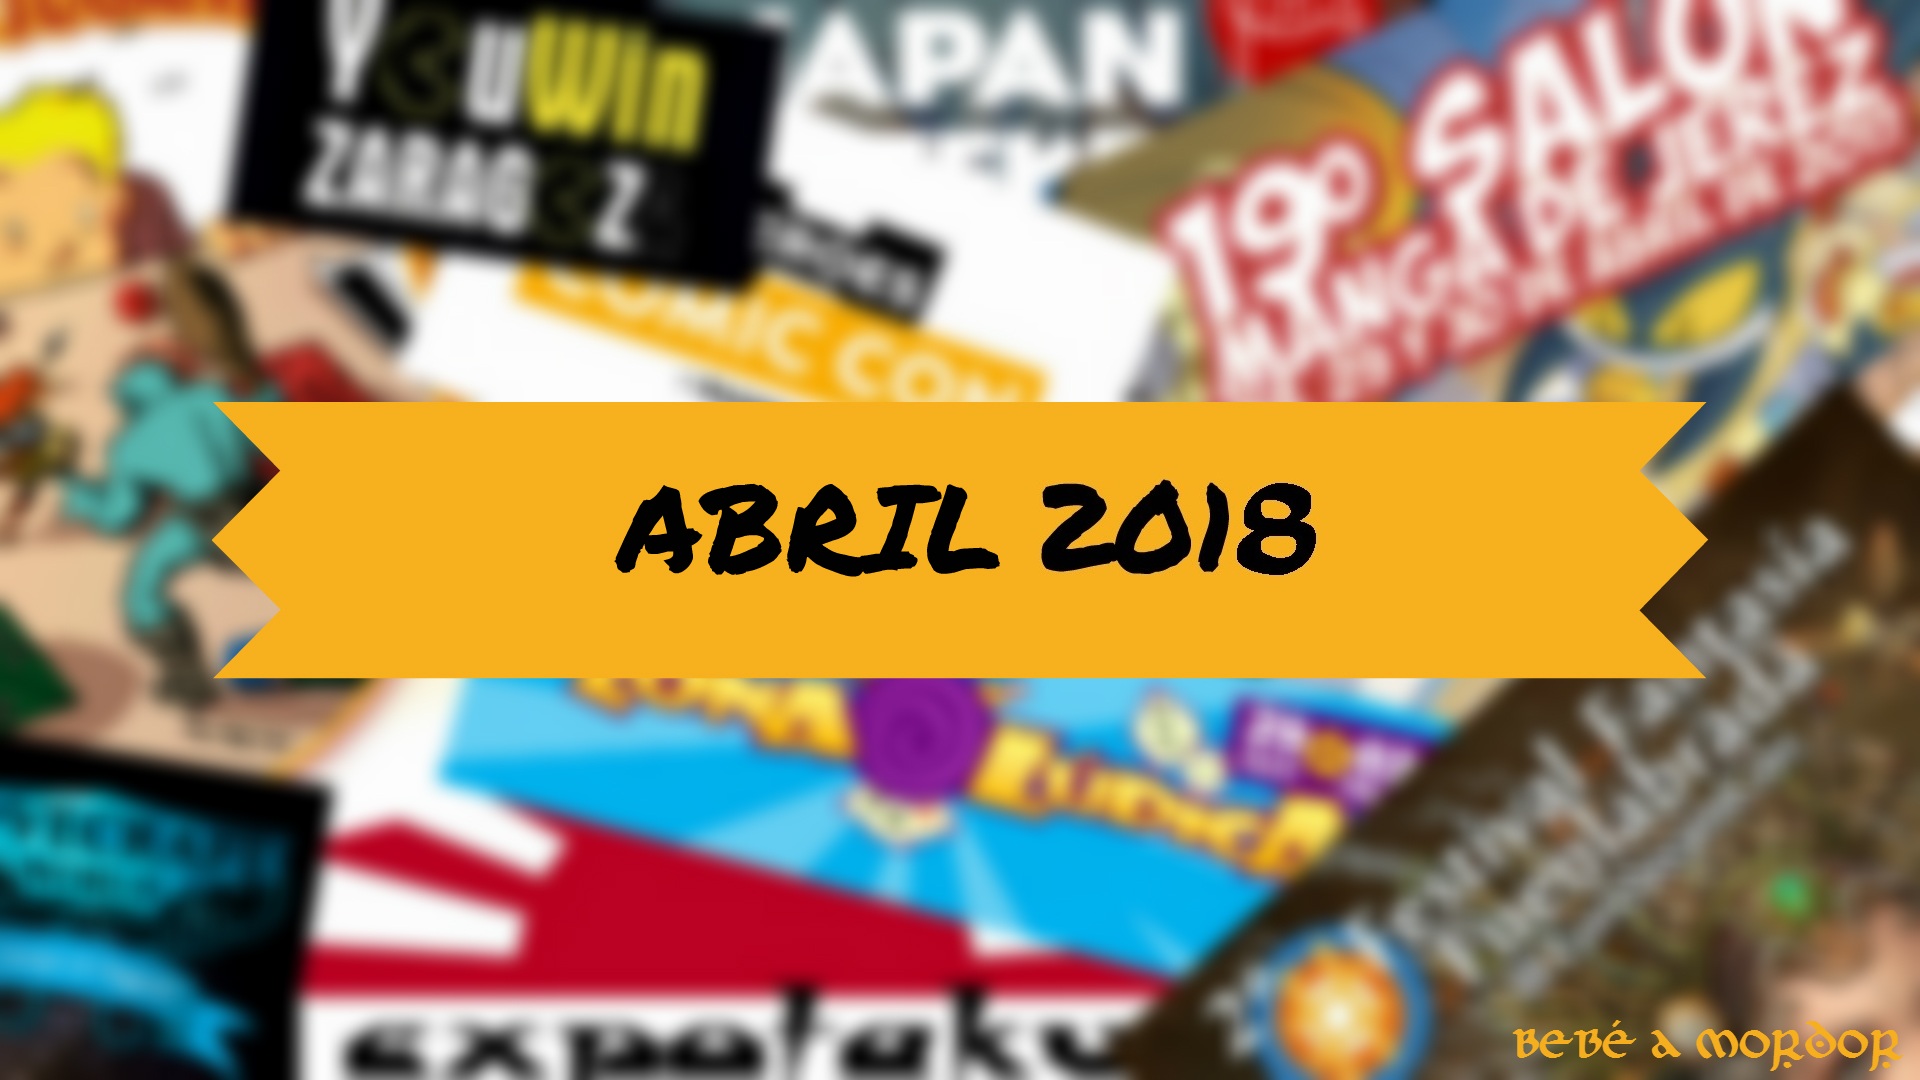 Calendario Friki - Agenda Eventos Abril 2018